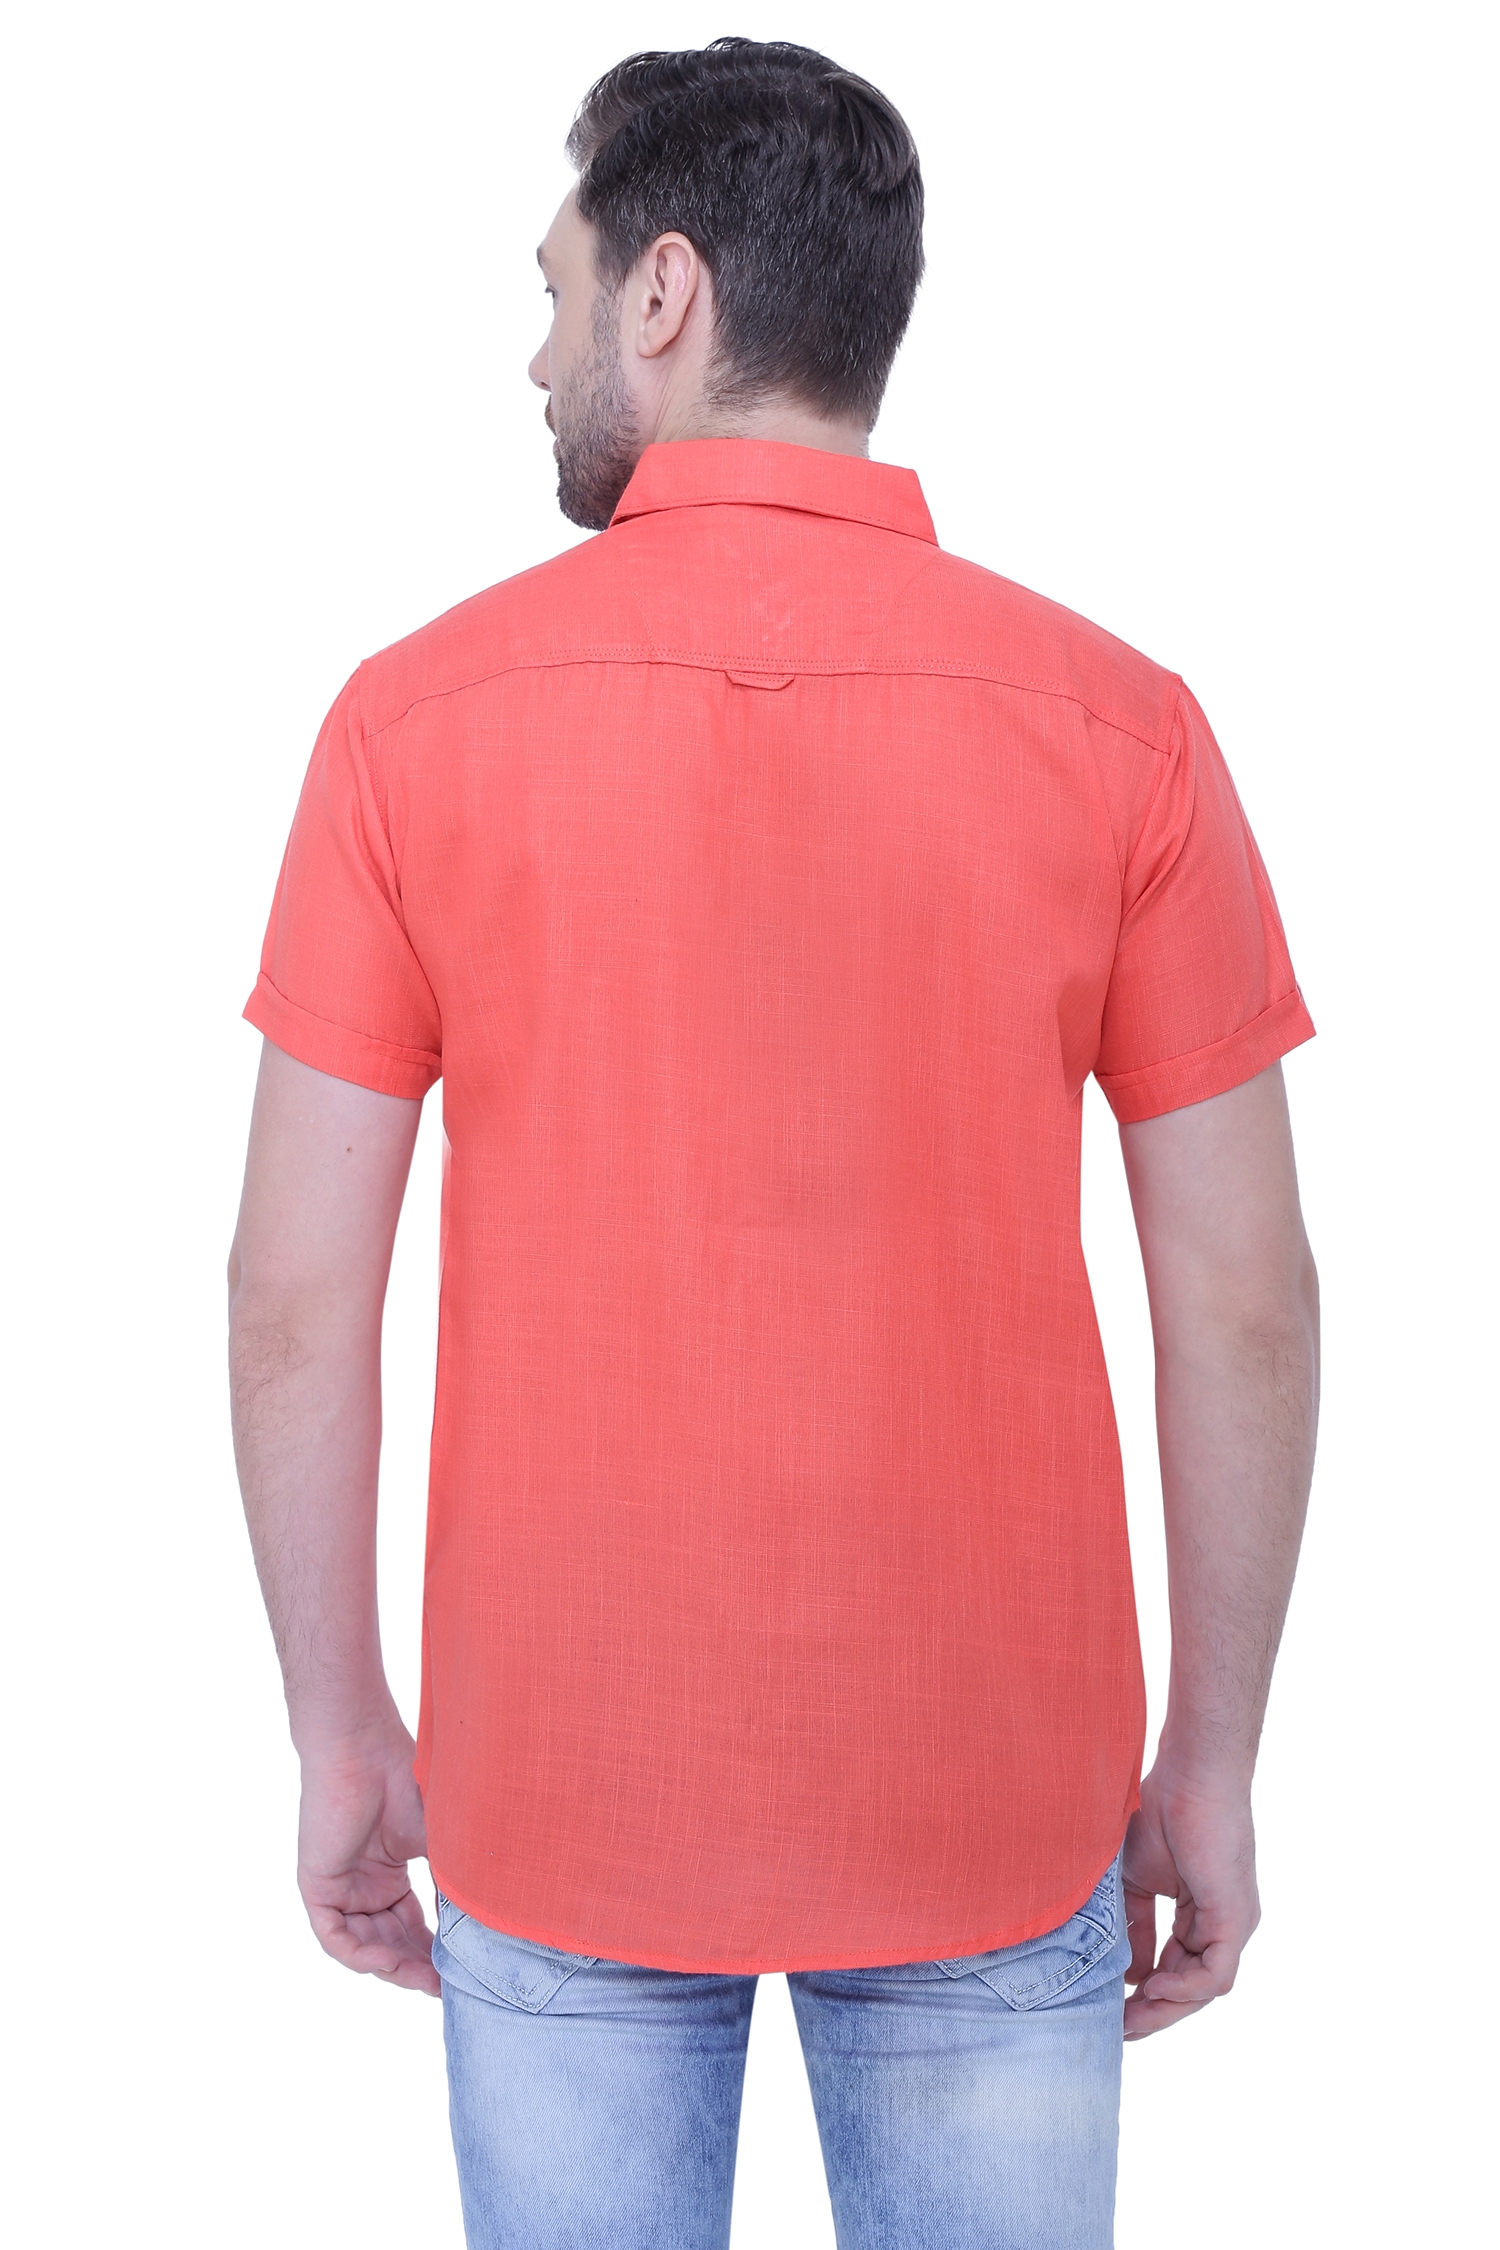 Kuons Avenue | Kuons Avenue Men's Linen Blend Half Sleeves Casual Shirt-KACLHS1233 2